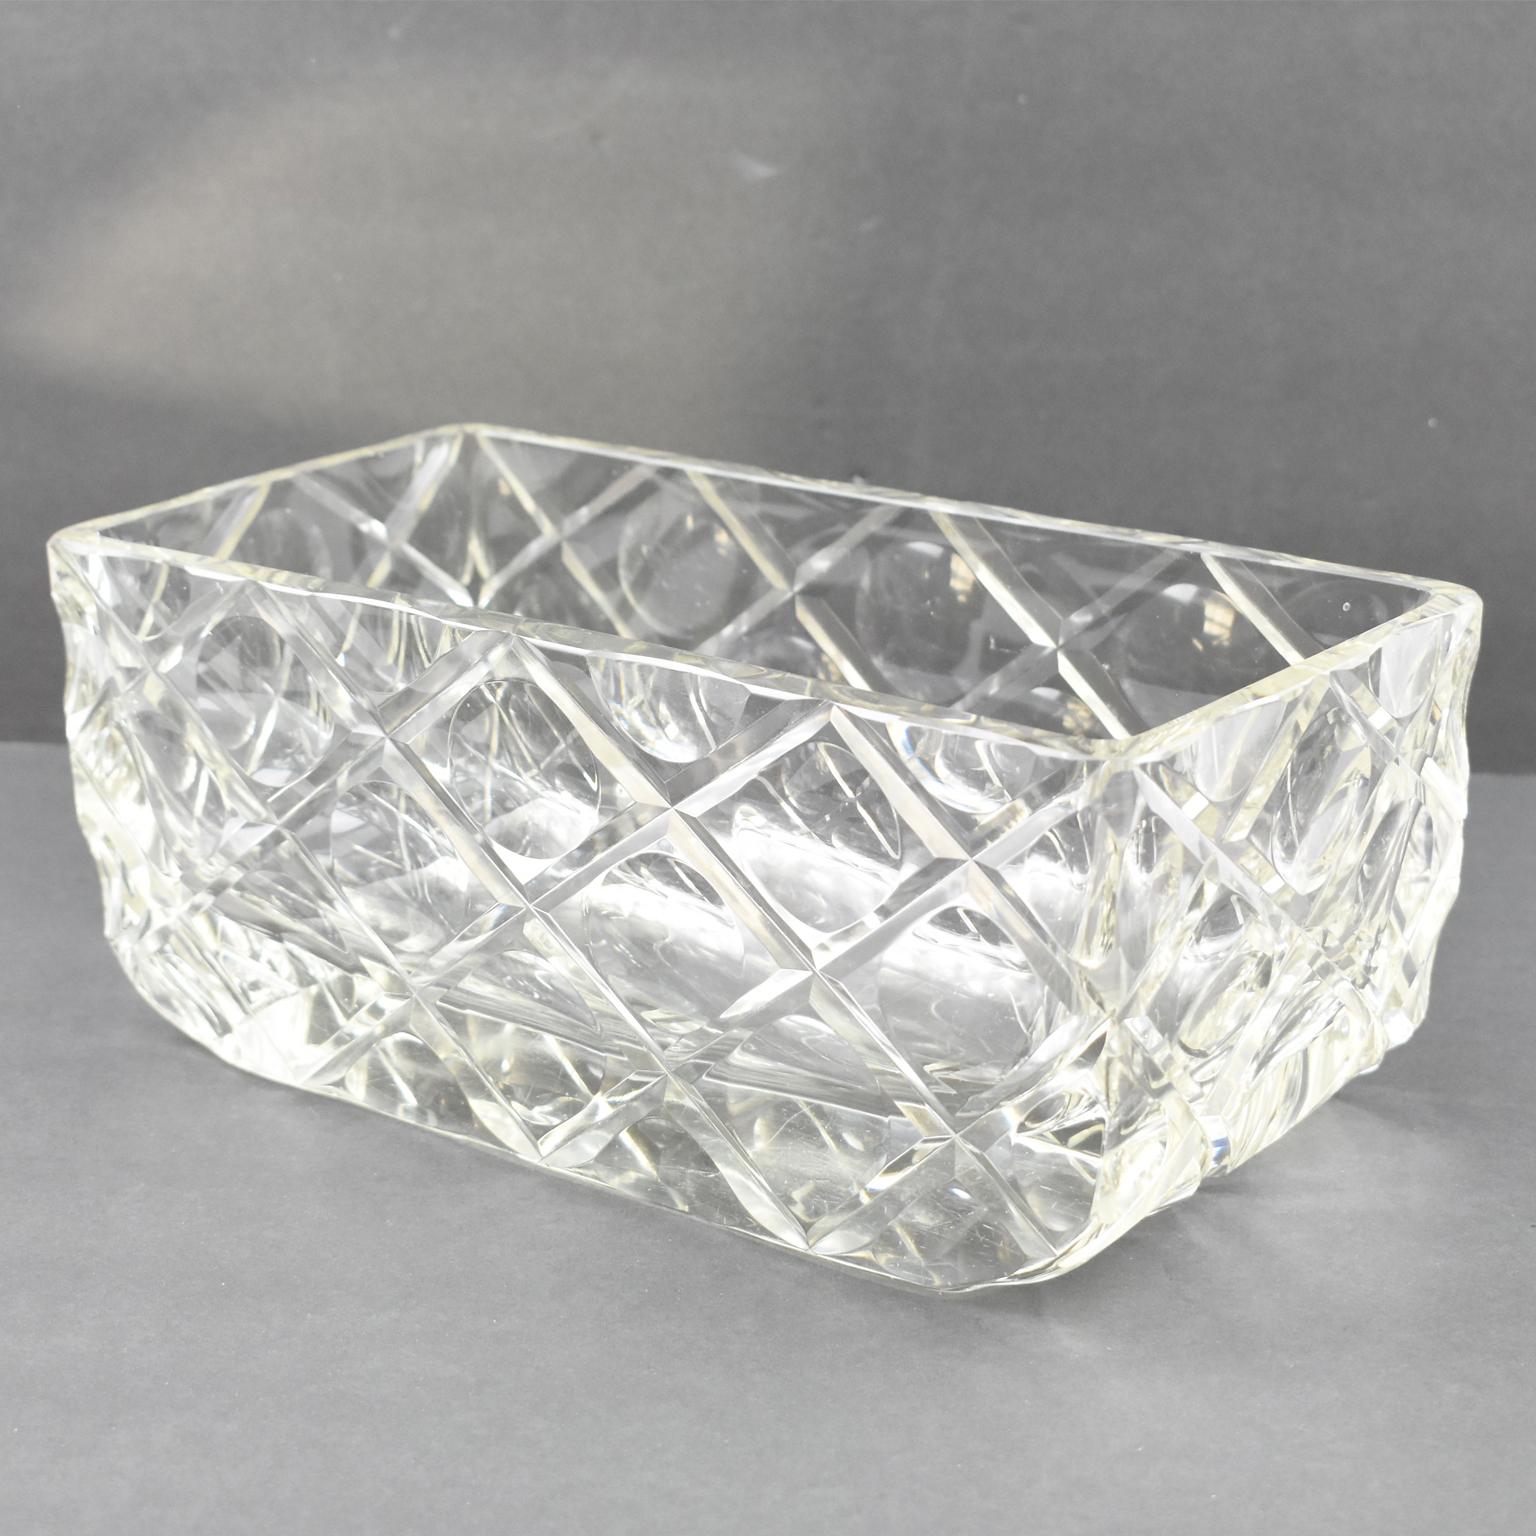 Art Deco Etched Crystal Centerpiece Decorative Bowl, France 1930s For Sale 4